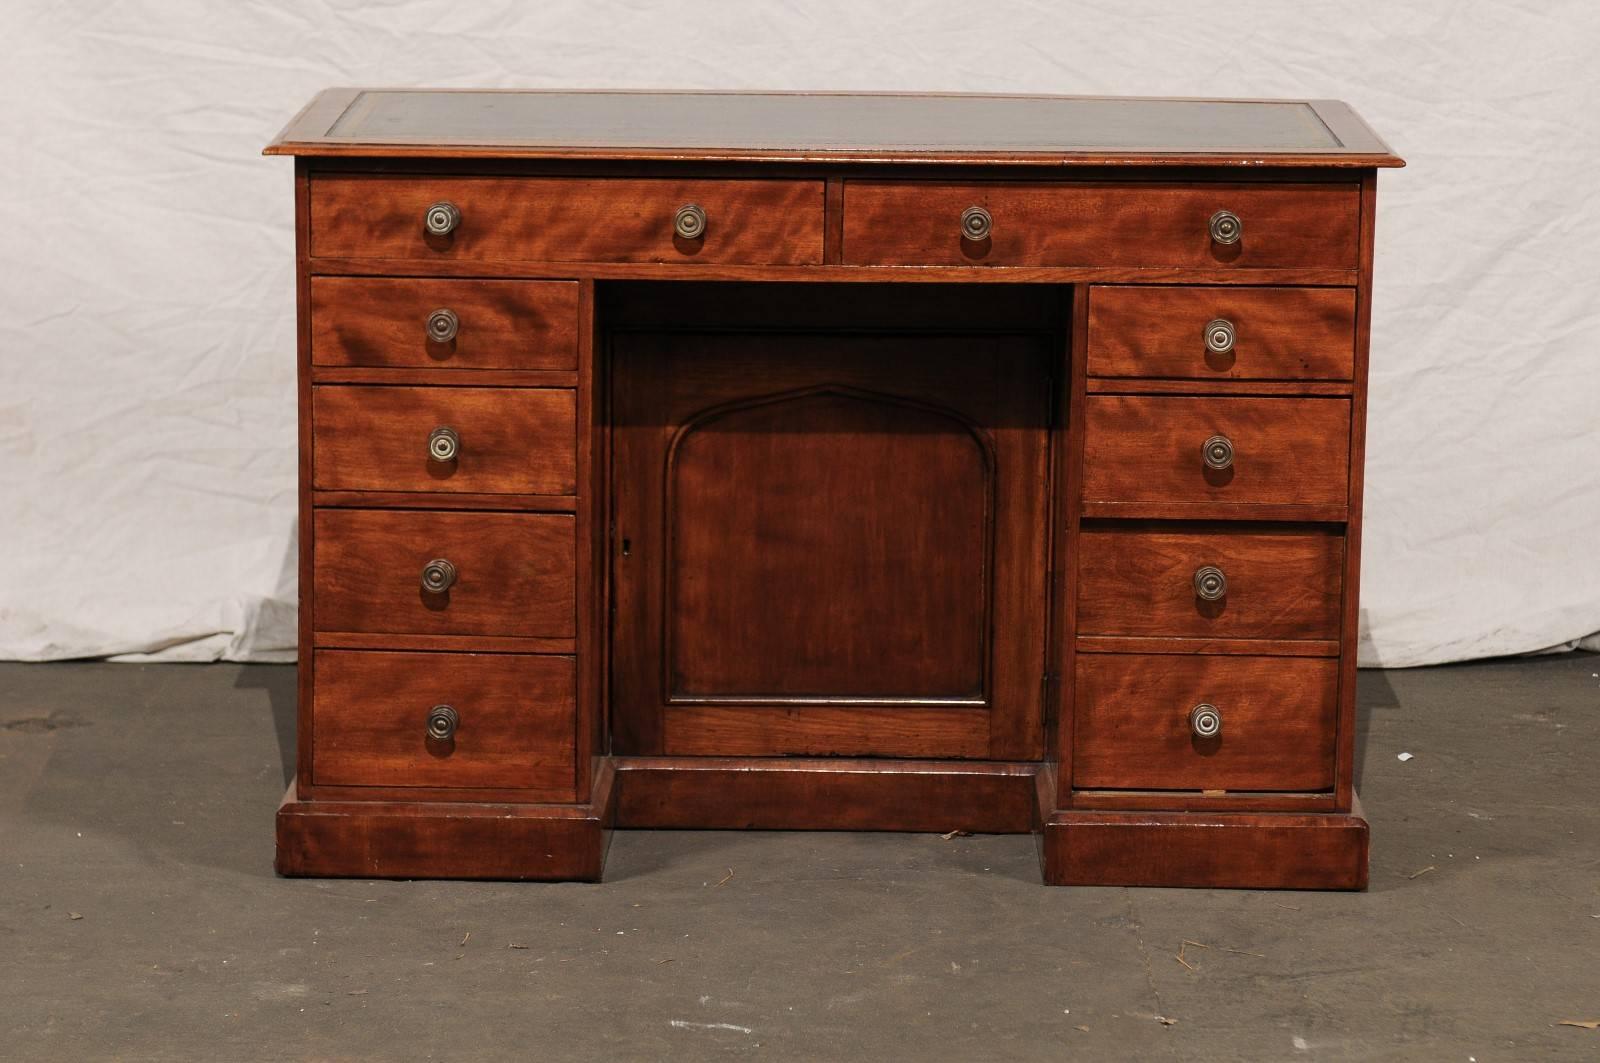 19th century English mahogany knee-hole desk, leather top
Size: Apron 19